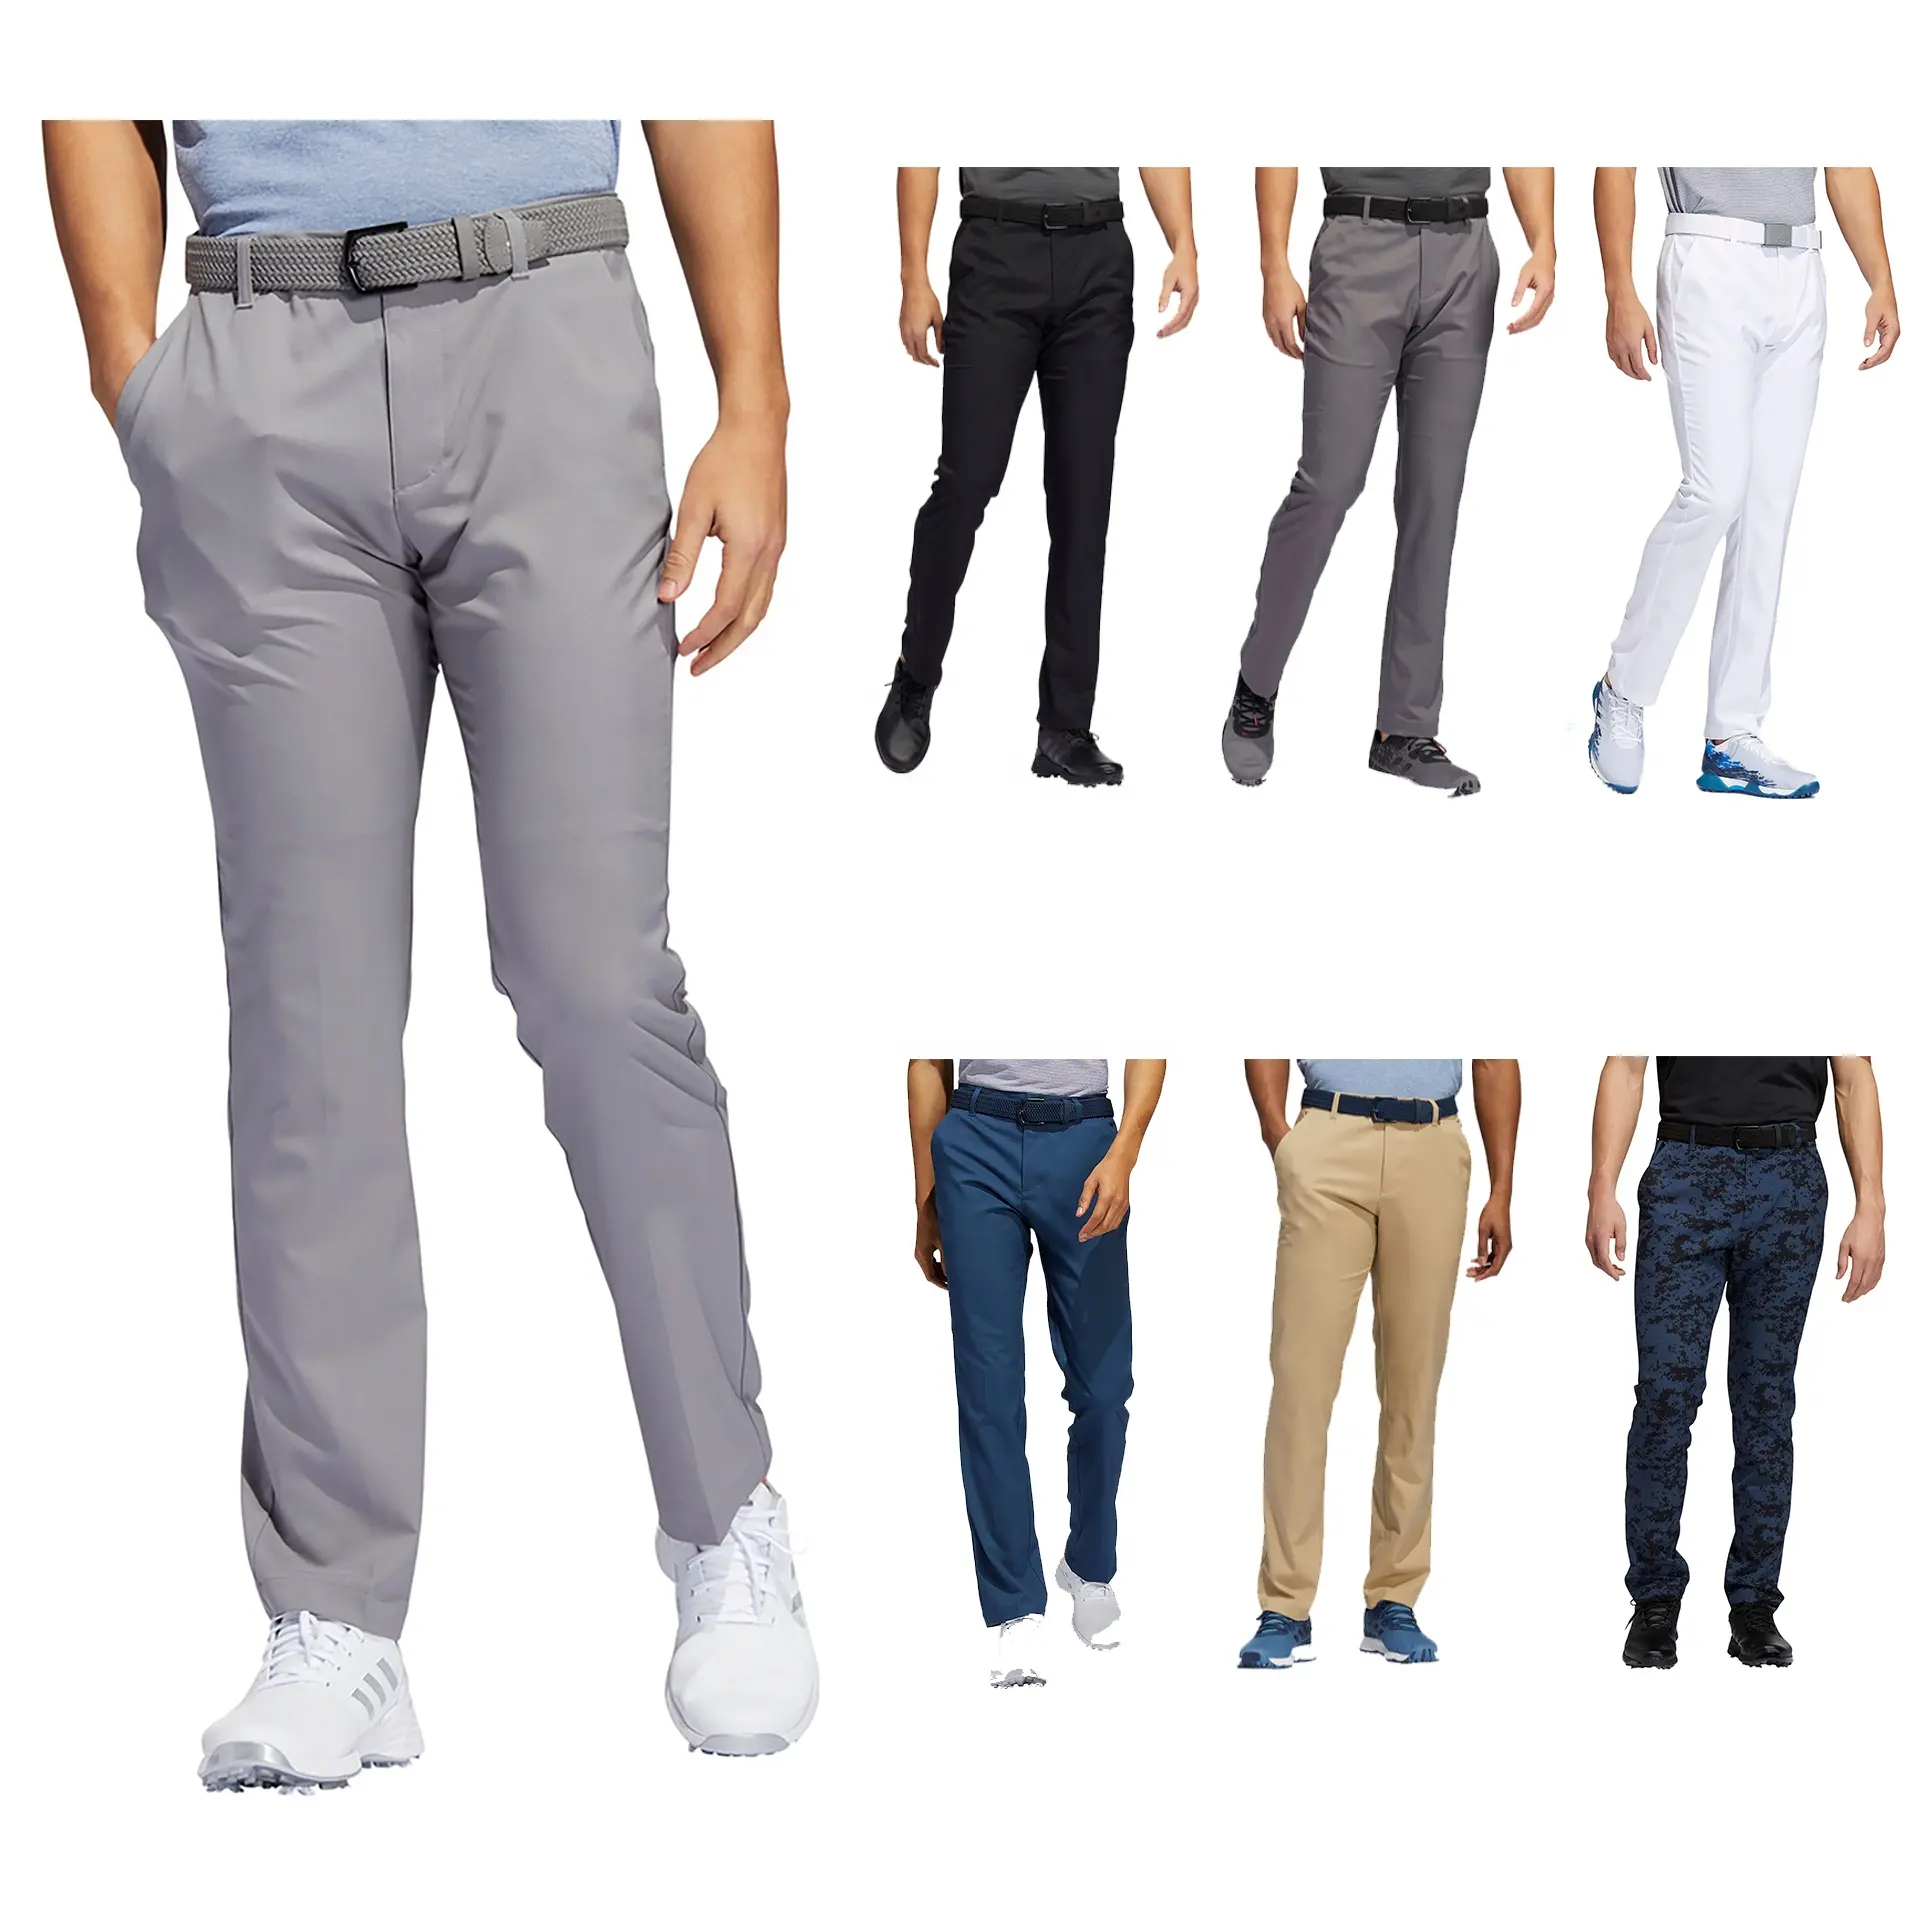 OEM High Quality Customized Original Long Pantsmen Hot Sale Men's Summer Thin Golf Pants Breathable Stretch Slim Fit Pants